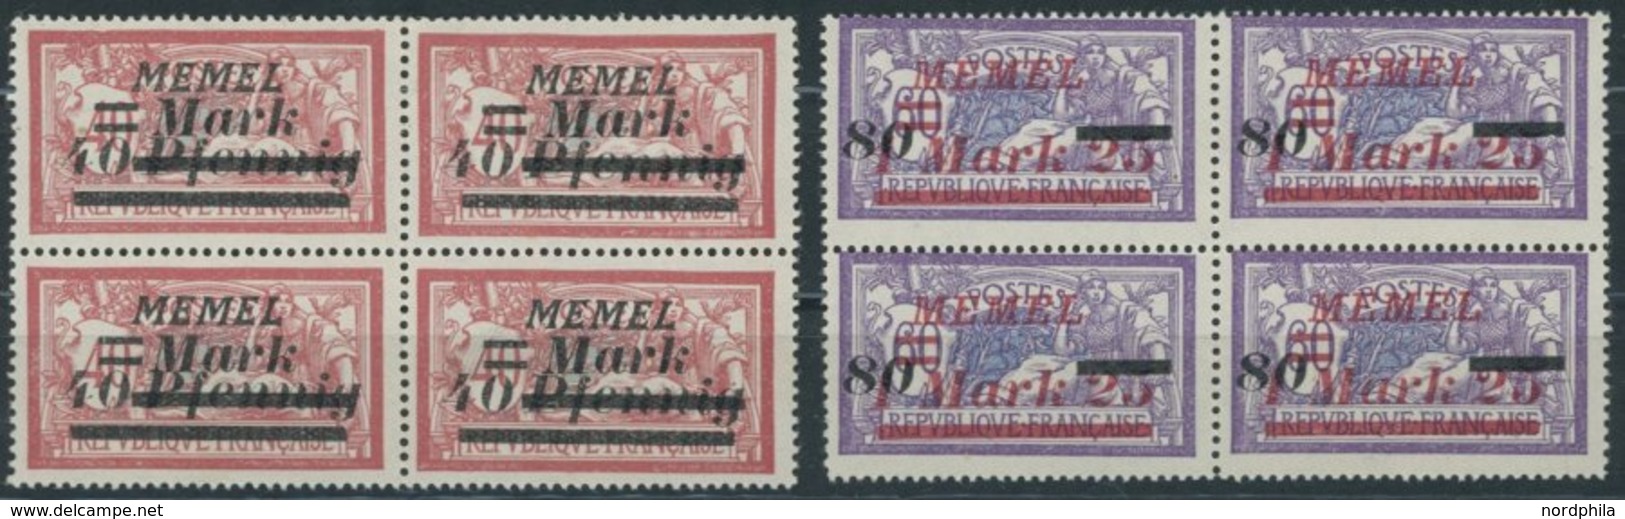 MEMELGEBIET 110-20 VB **, 1922, Staatsdruckerei Paris In Viererblocks, 2 Postfrische Prachtsätze, Mi. 336.- - Memelland 1923